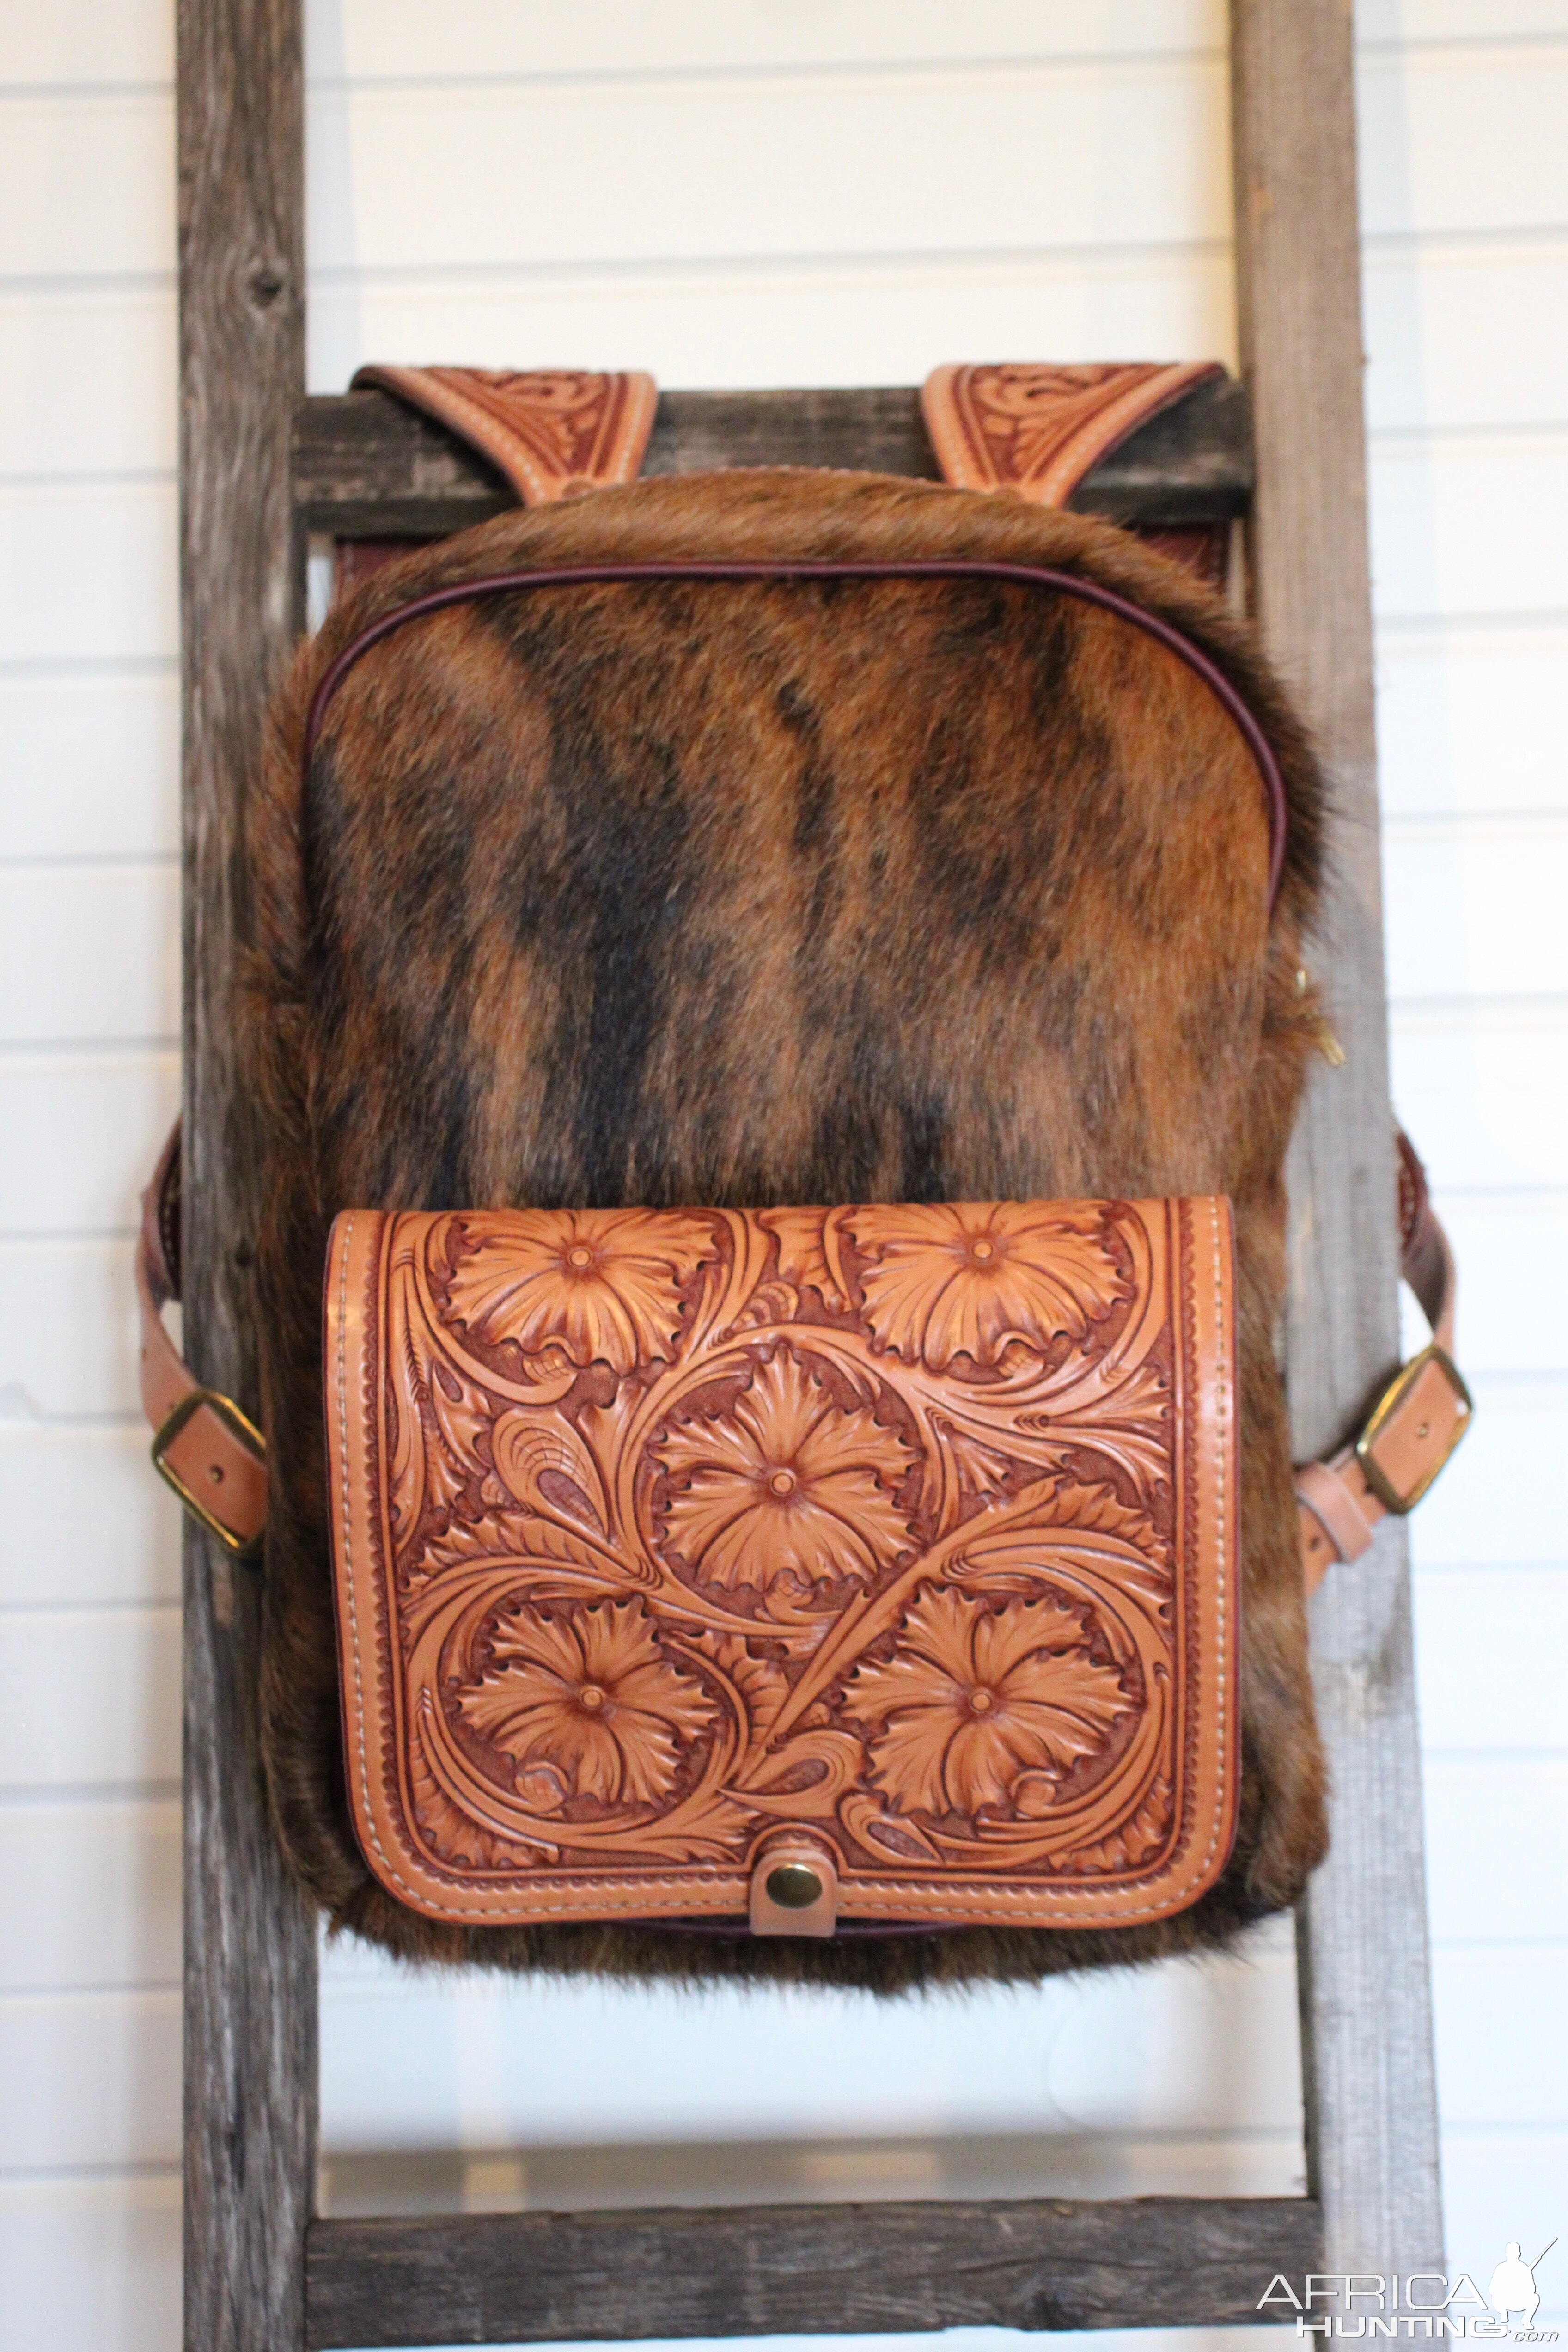 Leather & Skin Backpack